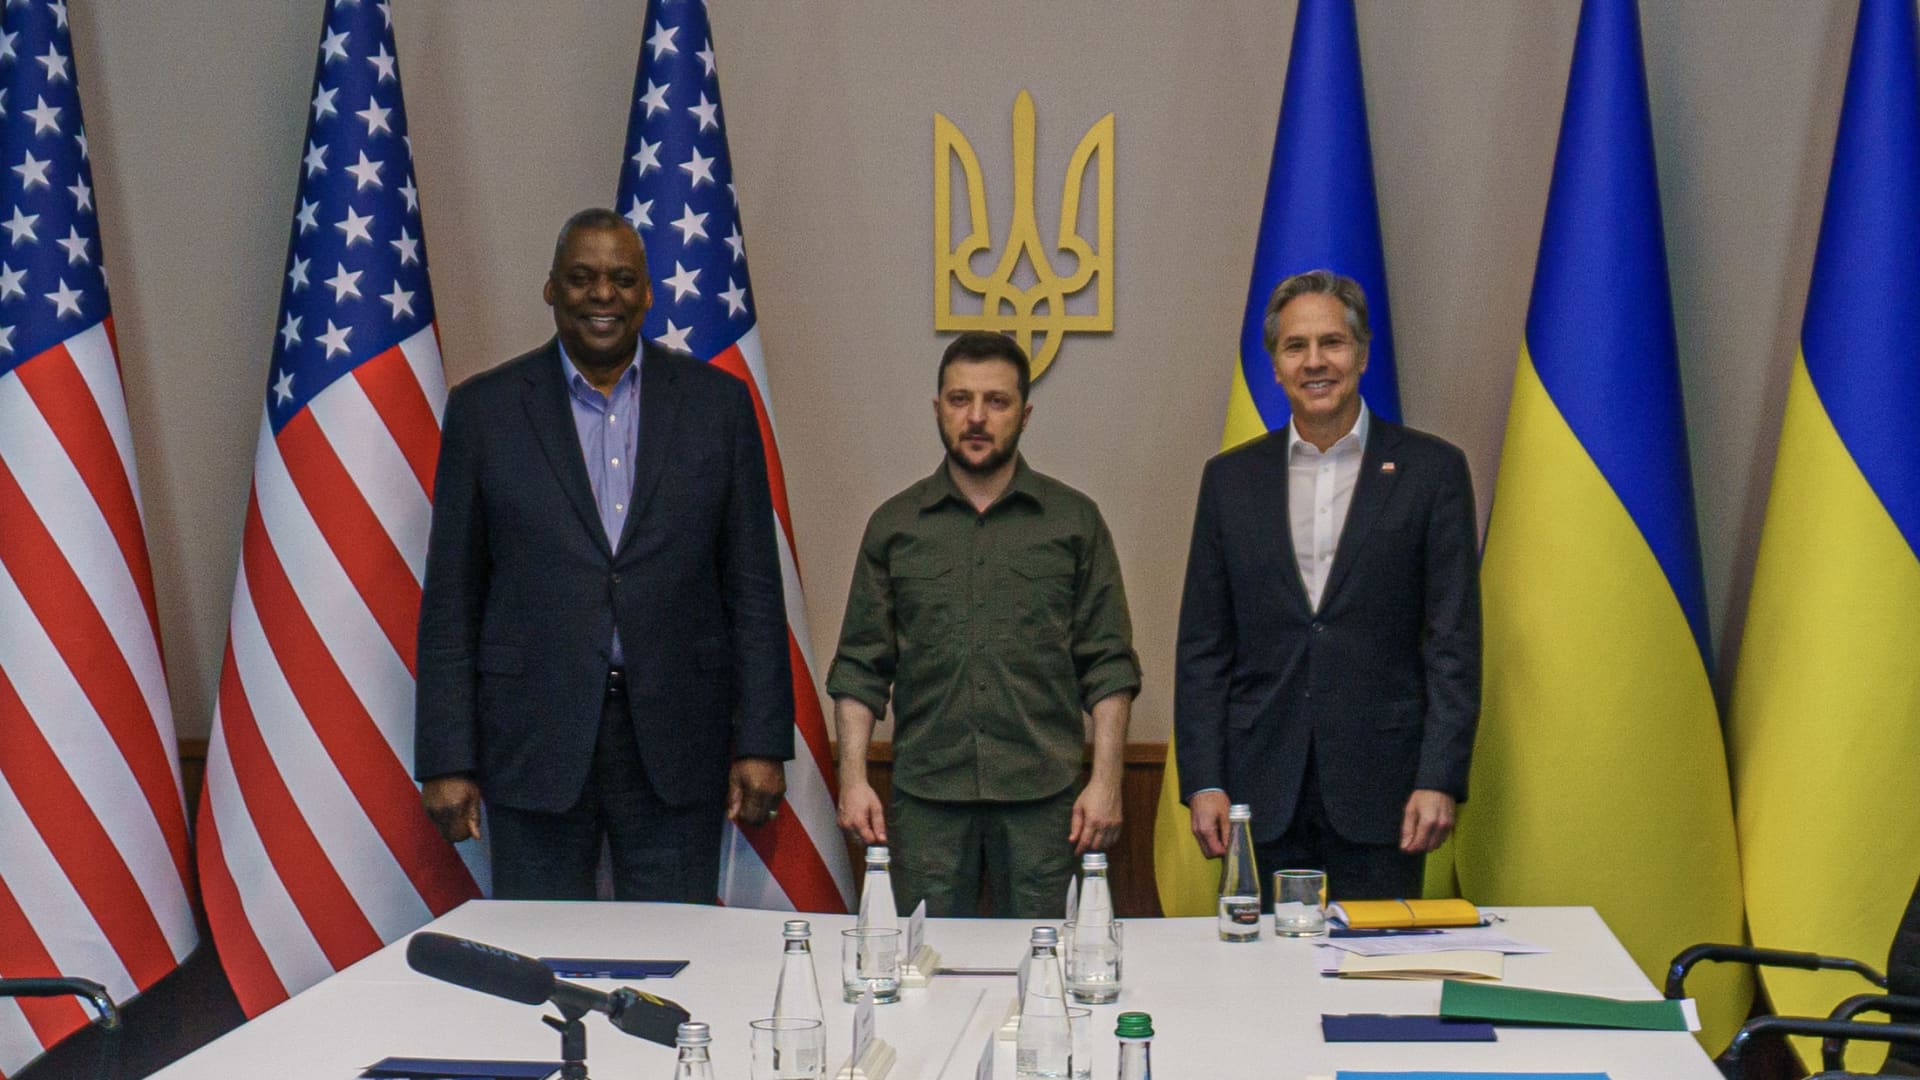 U.S. Secretary of Defense Lloyd Austin III, left, and U.S. Secretary of State Antony Blinken, right, traveled to Kyiv, Ukraine, on April 24, 2022, to meet with Ukrainian President Volodymyr Zelenskyy.